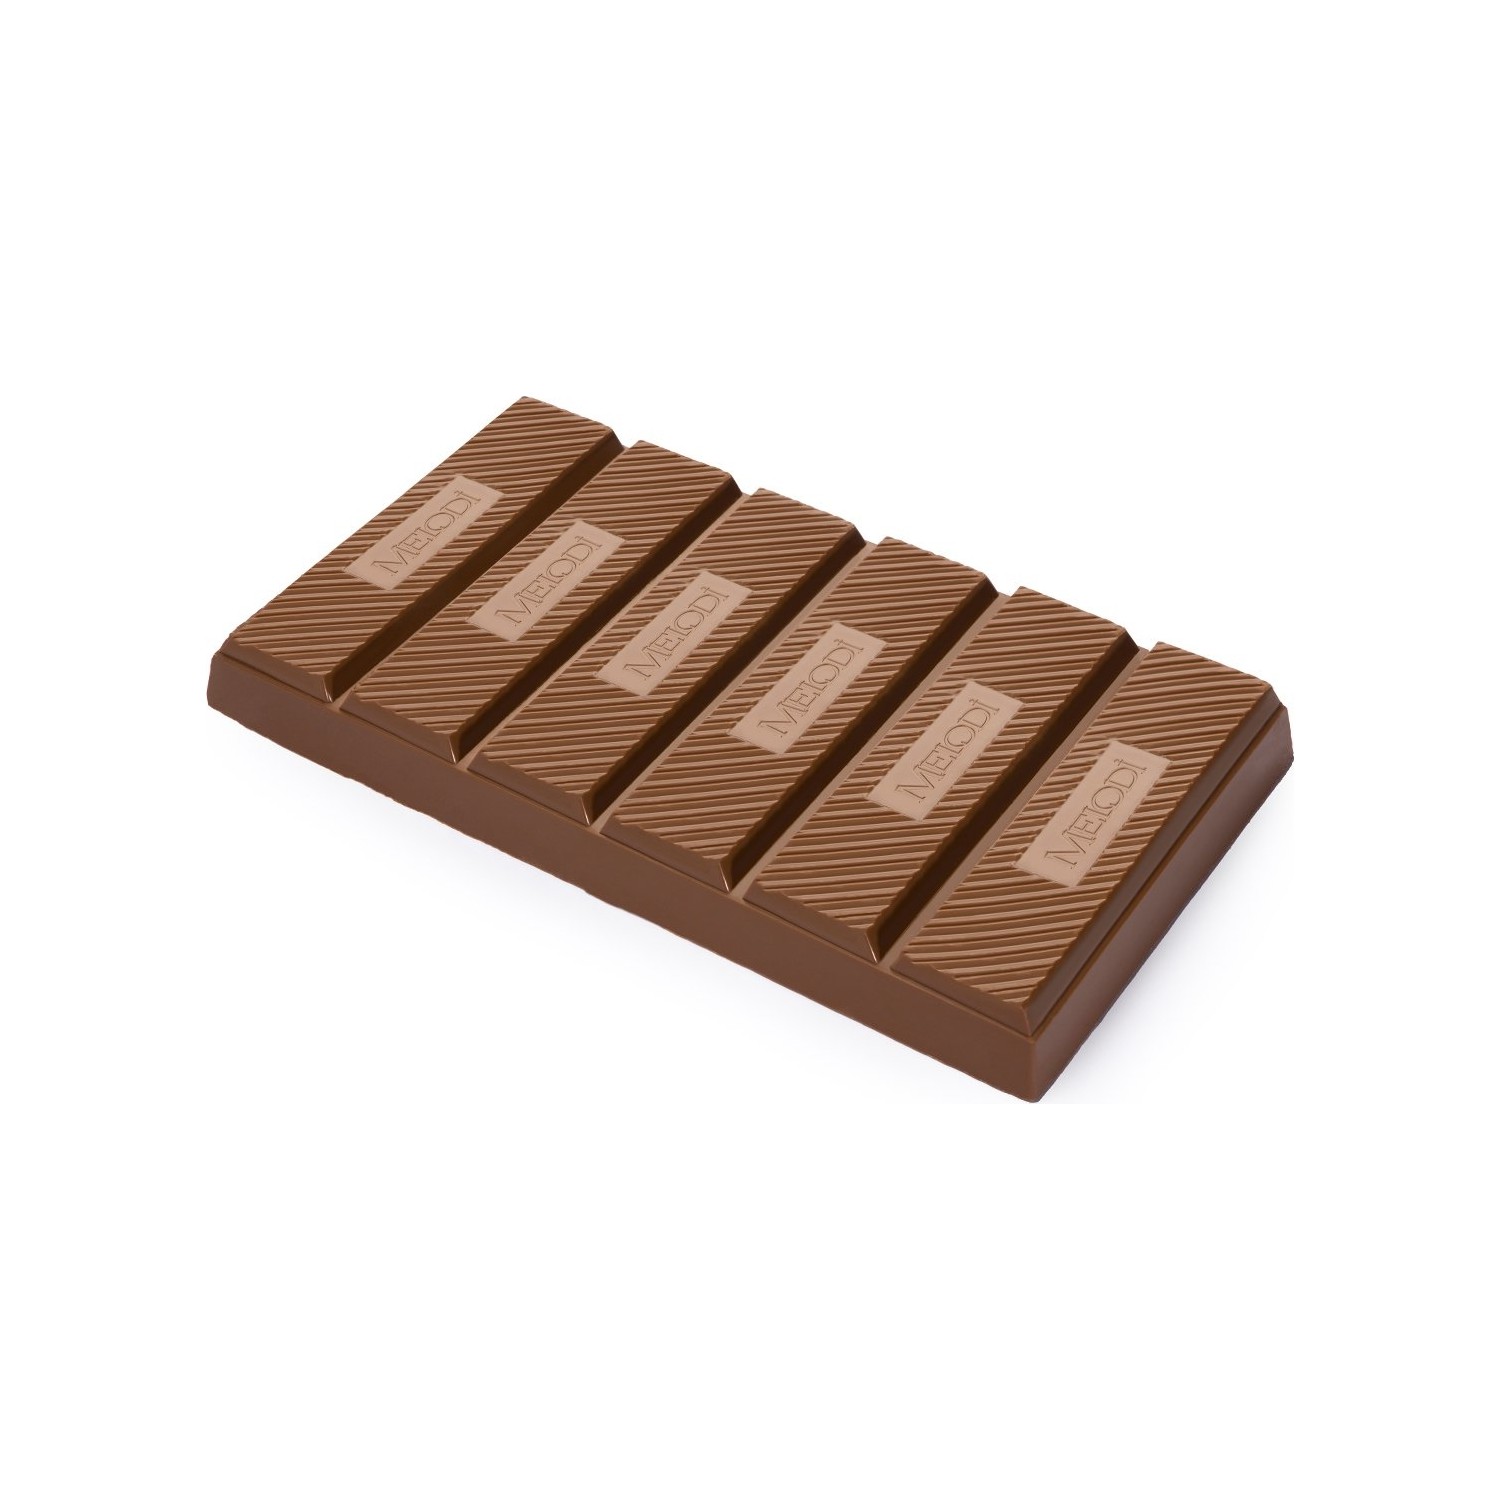 Melodi Çikolata Sütlü Çikolata Kuvertür Blok 2,5 kg Fiyatı